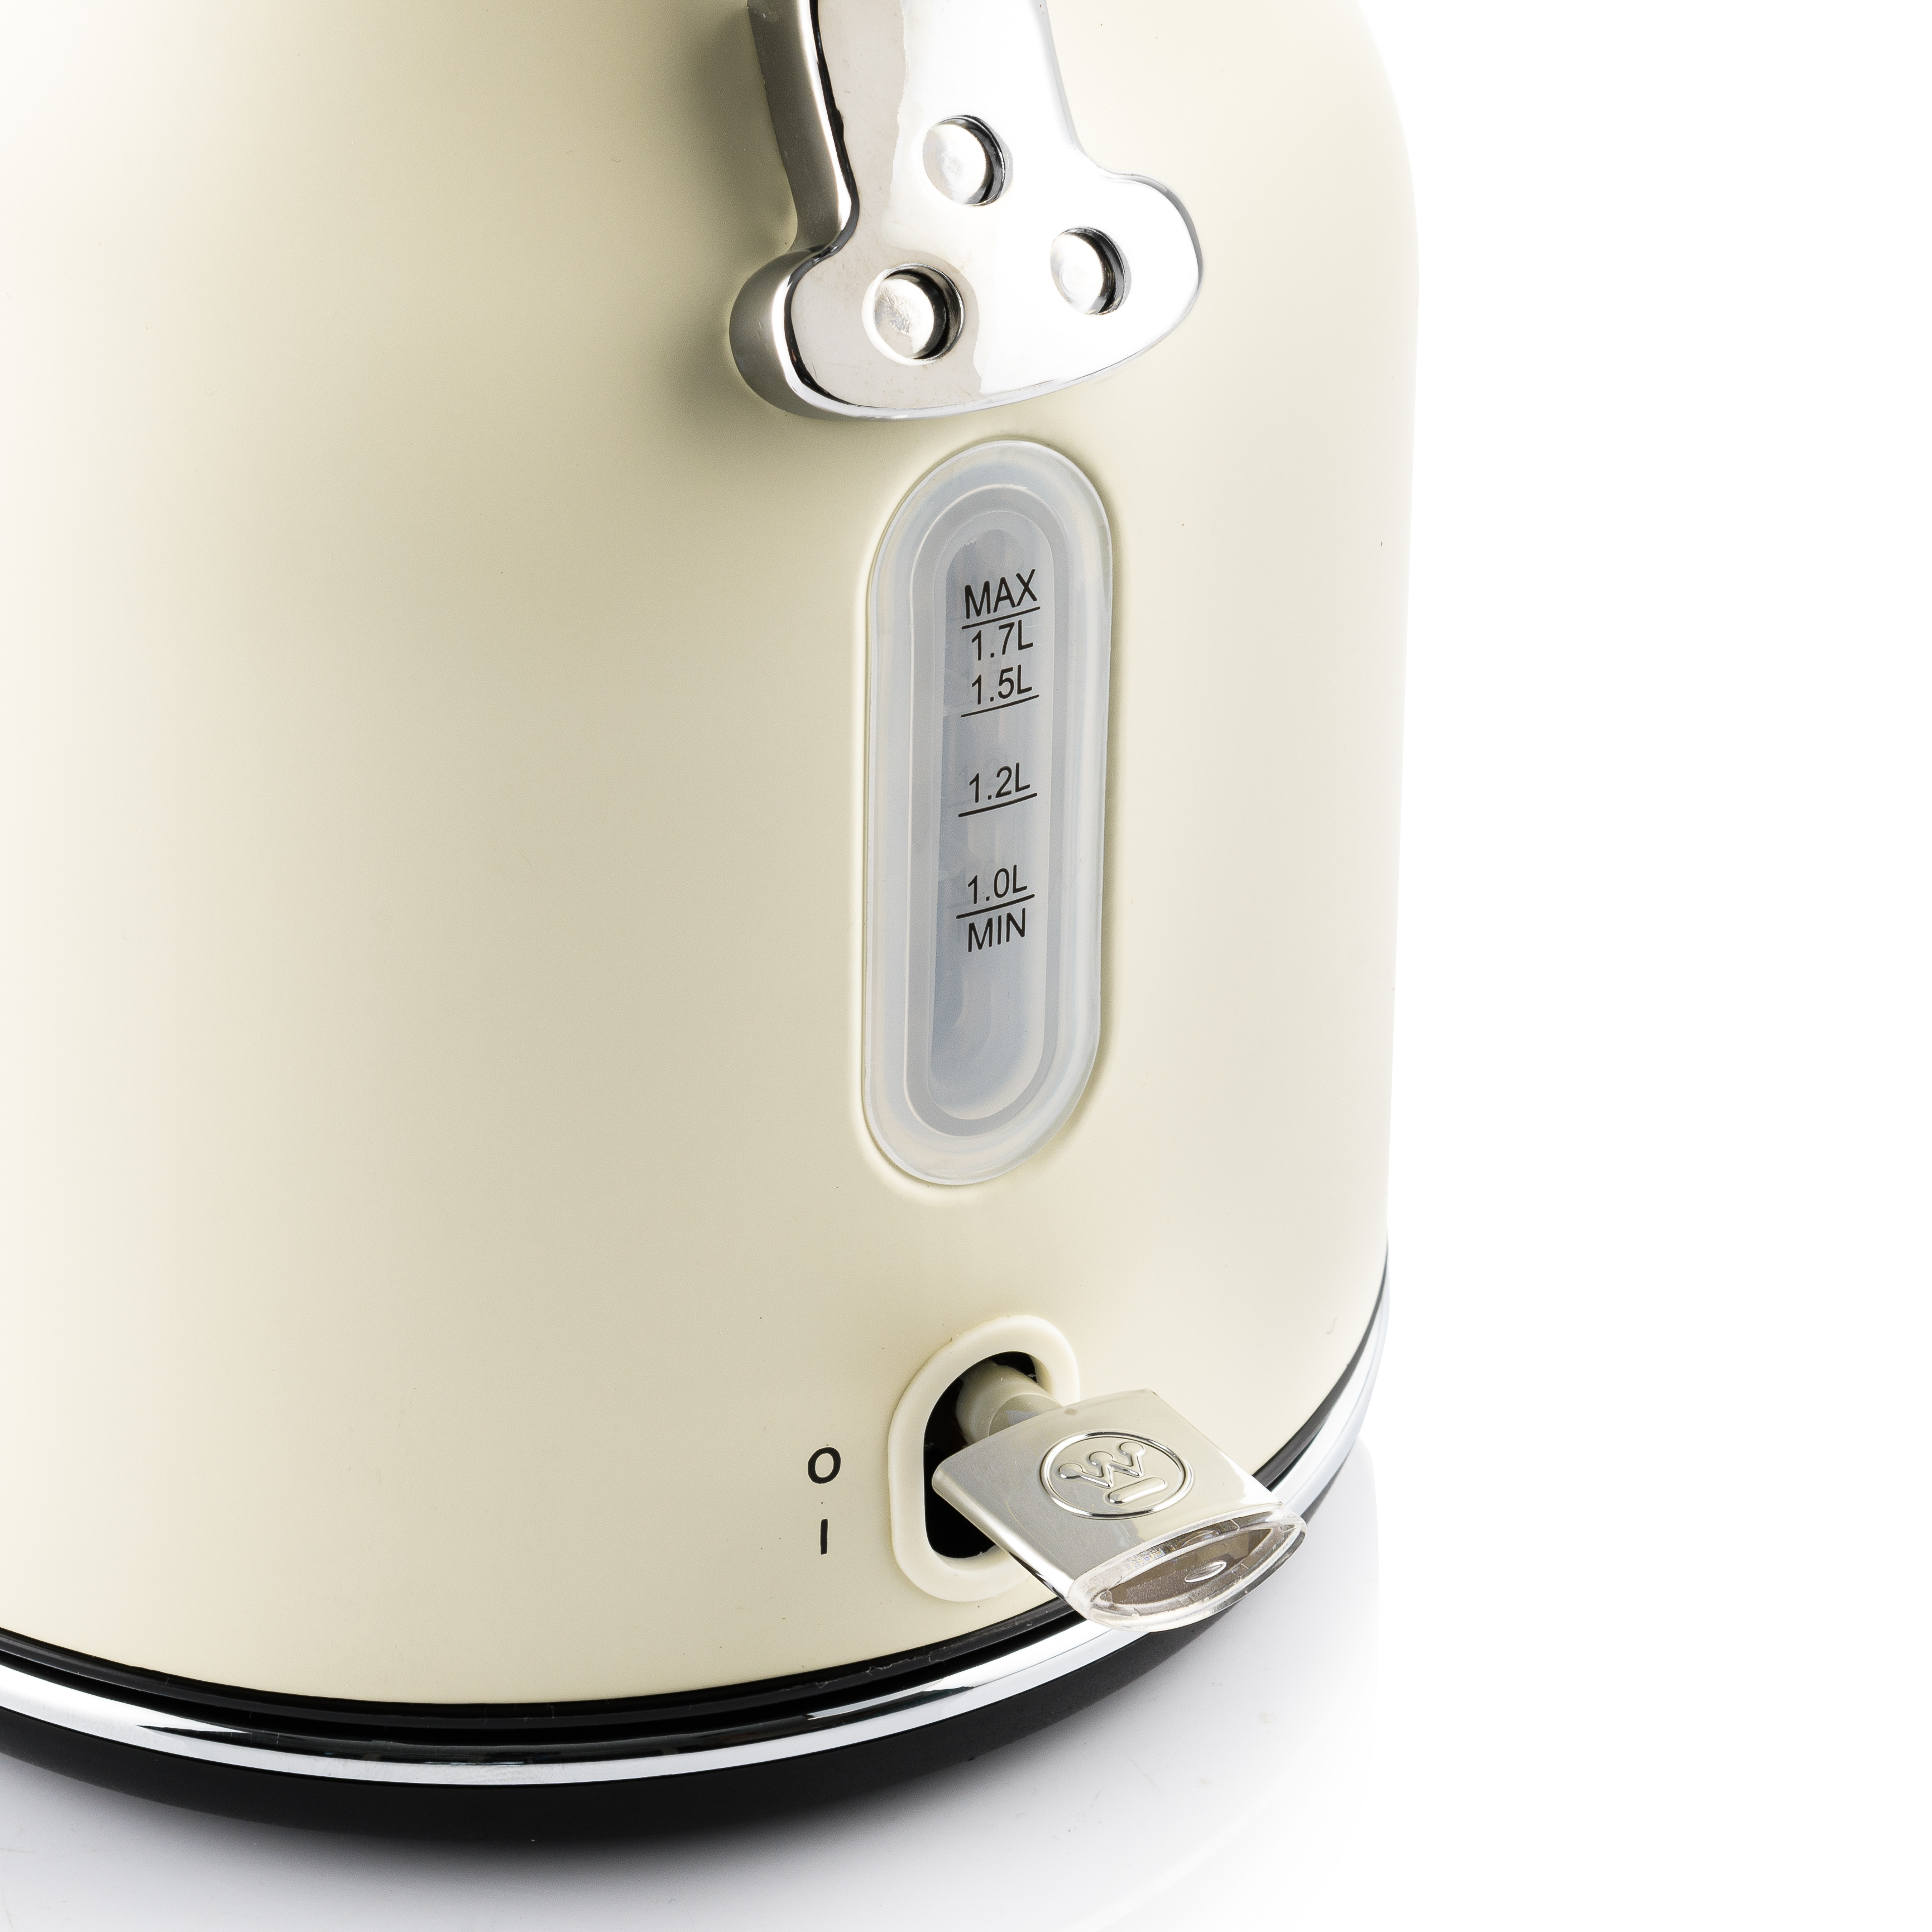 cremeweiß 2) Toaster Wasserkocher Set WESTINGHOUSE WES15 Watt, (815 Mixer Schlitze: